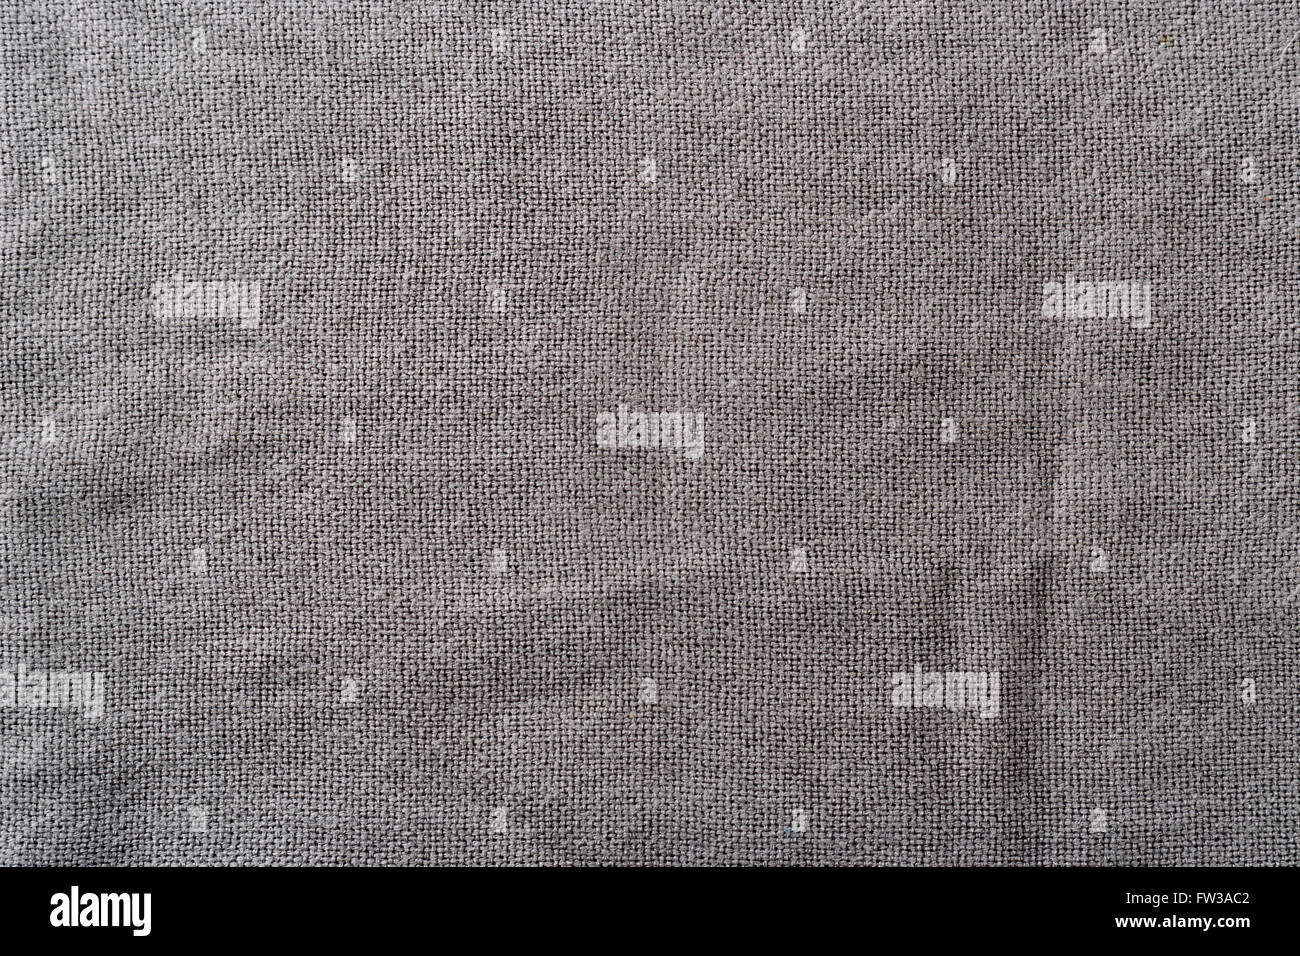 Fabric texture background closeup Stock Photo - Alamy